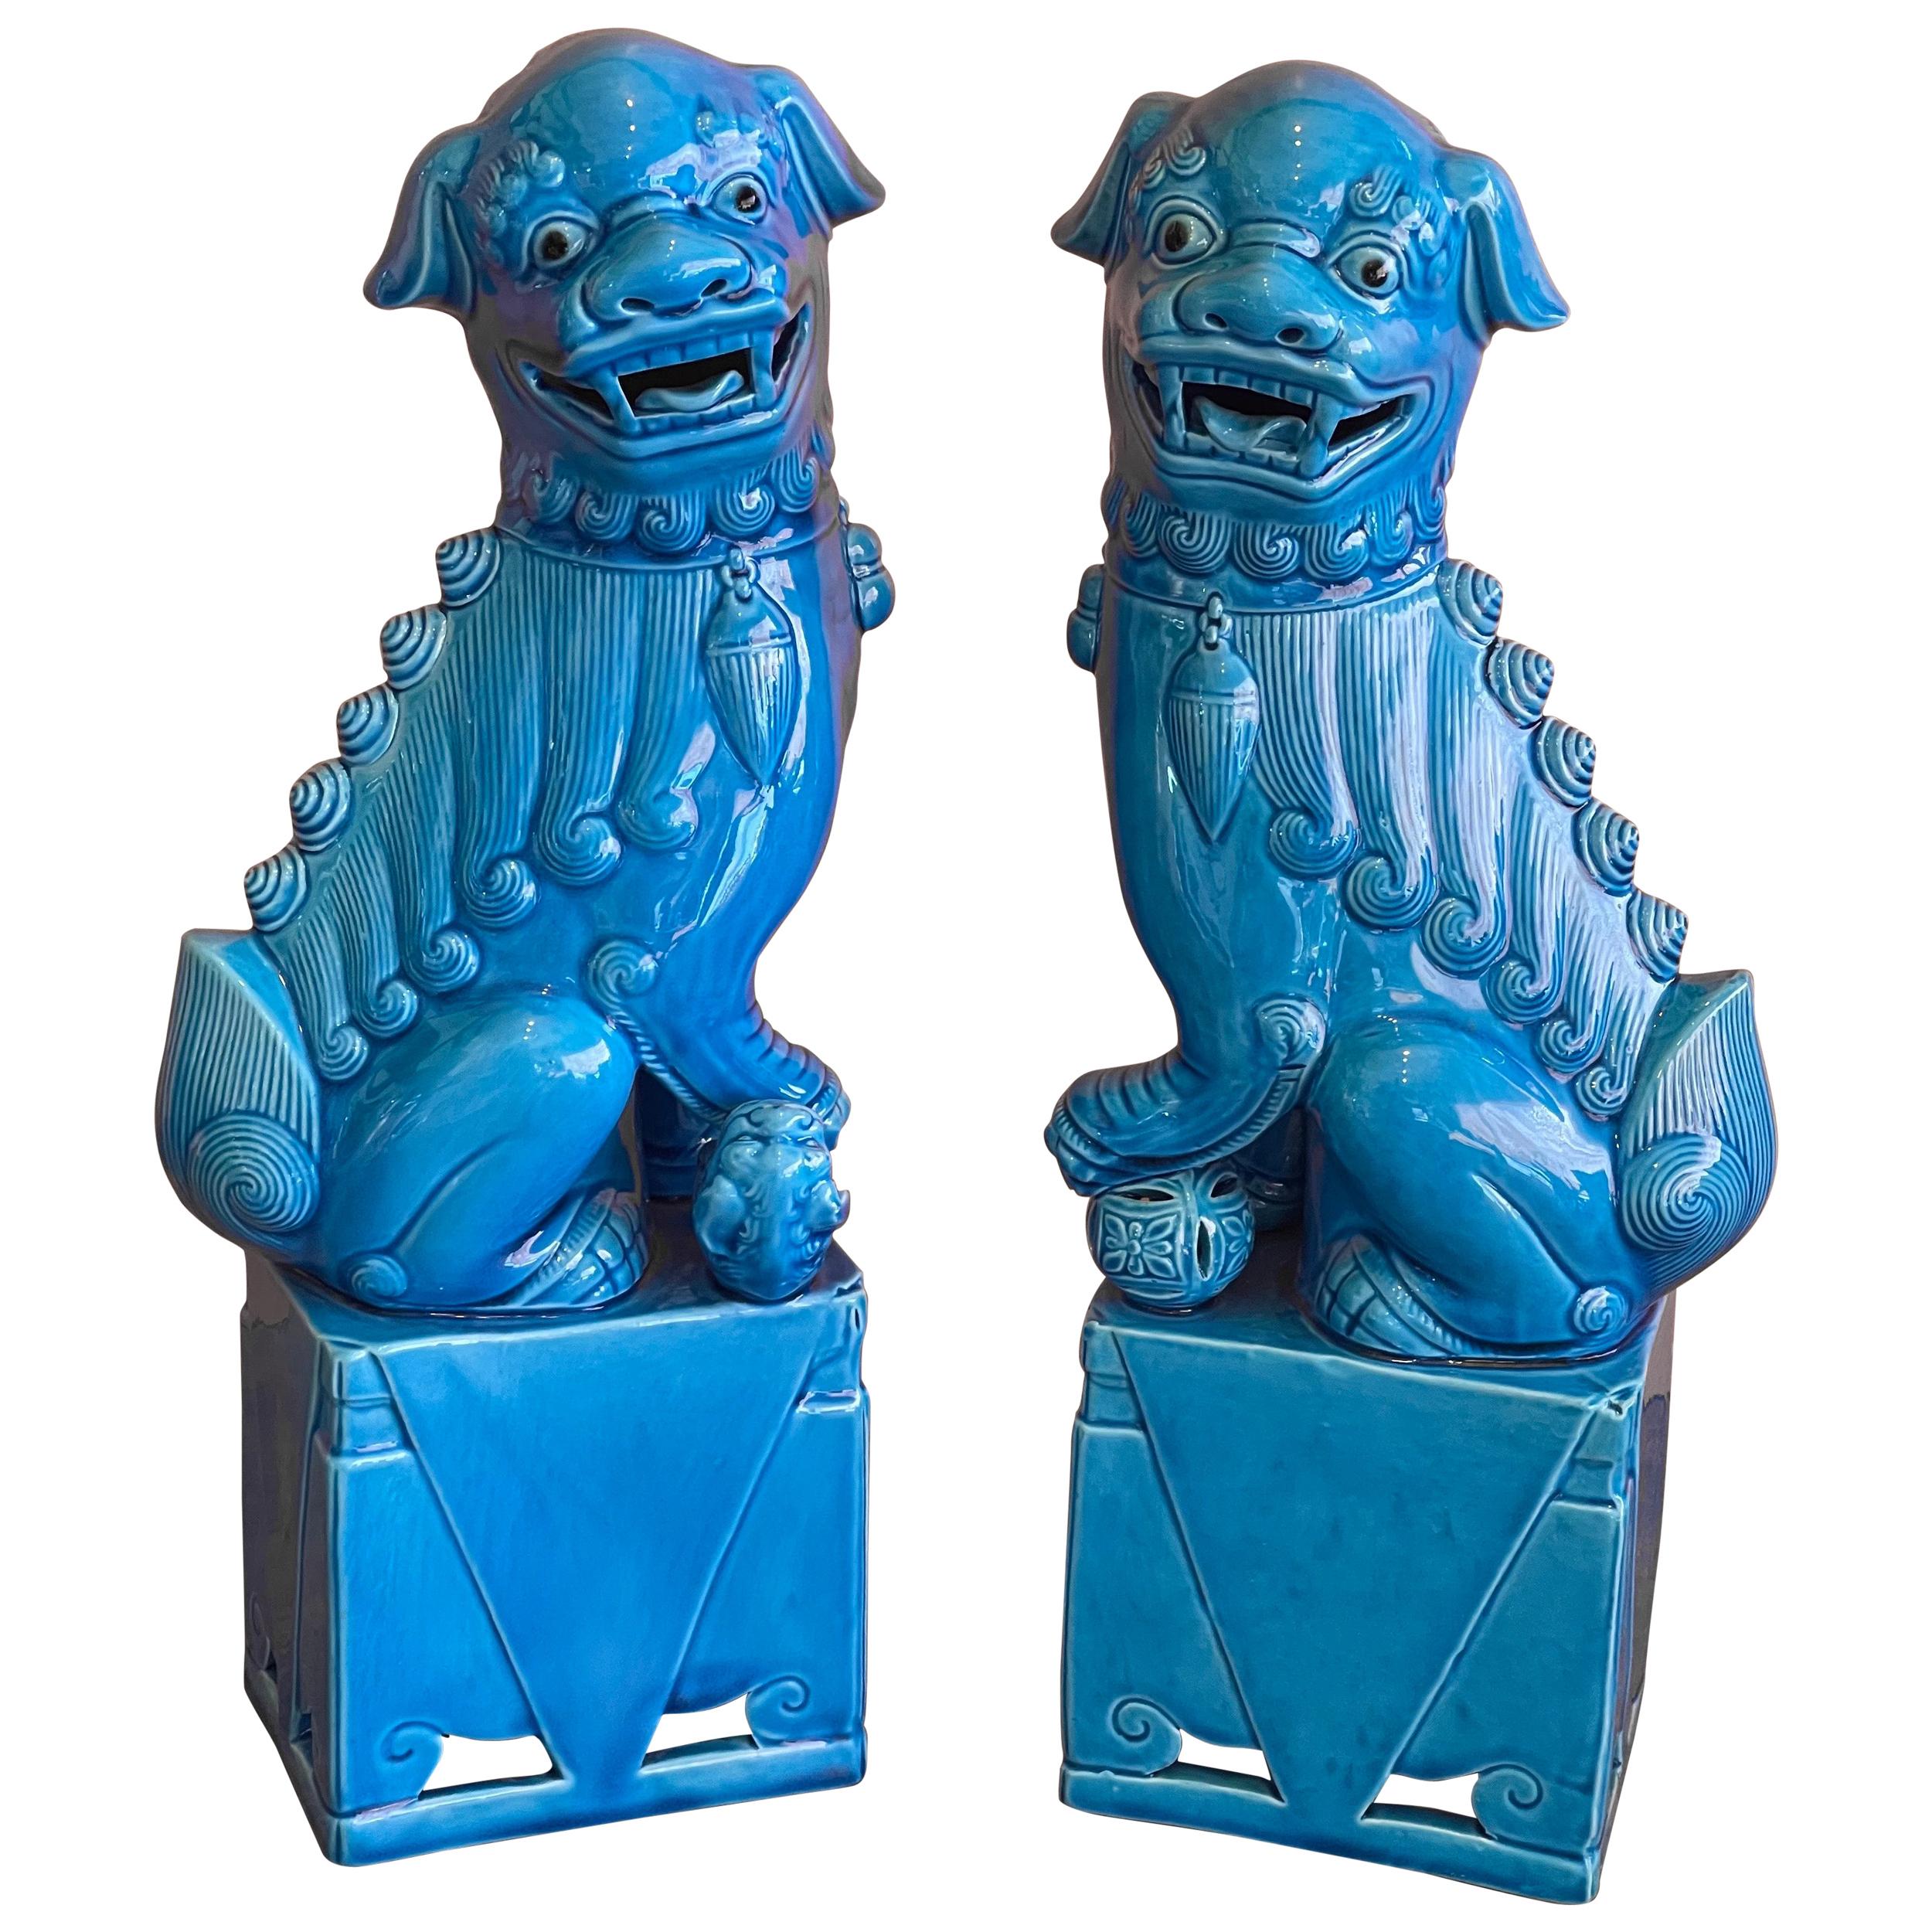 Massive Pair of Vintage Turquoise Blue Ceramic Foo Dog Sculptures